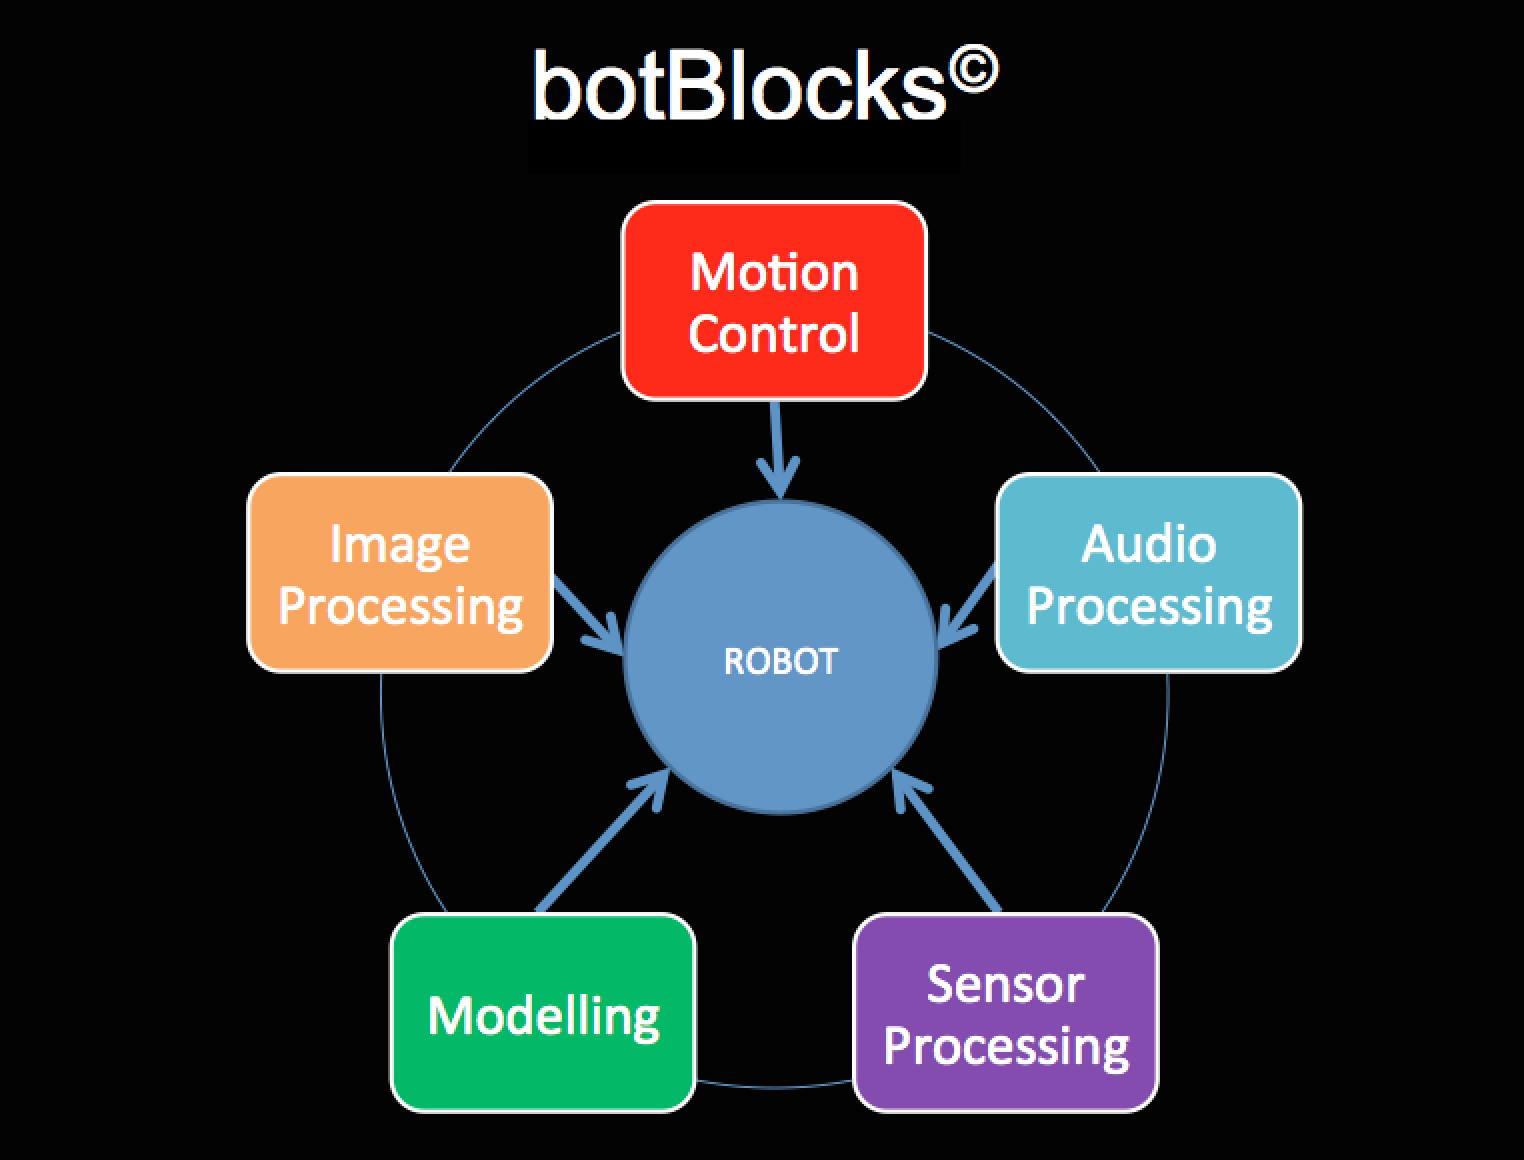 The 5 modules that makes botBlocks